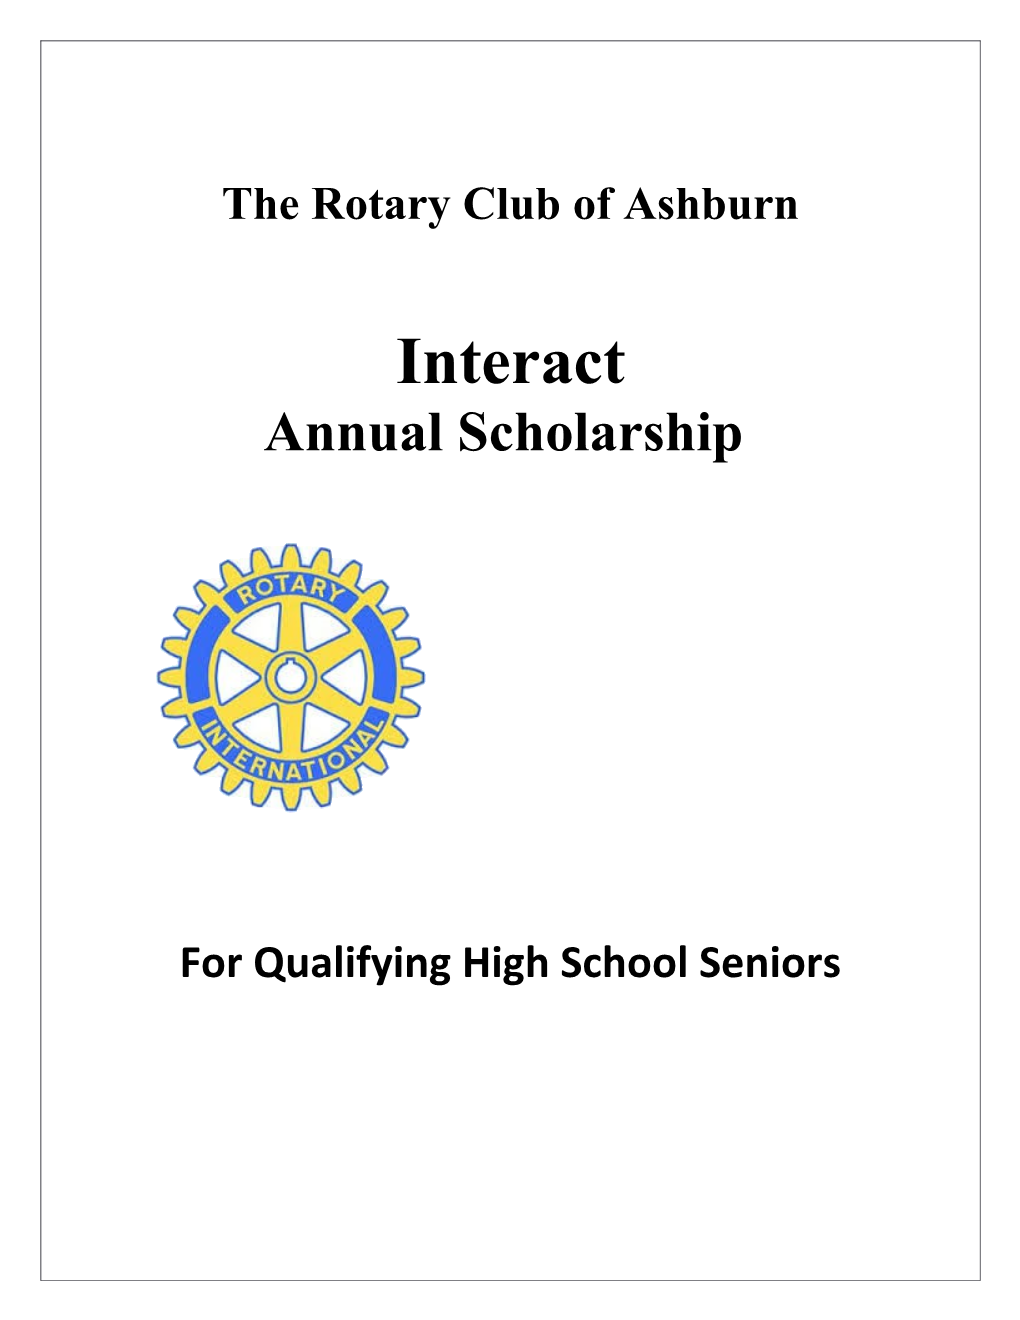 The Rotary Club of Ashburn